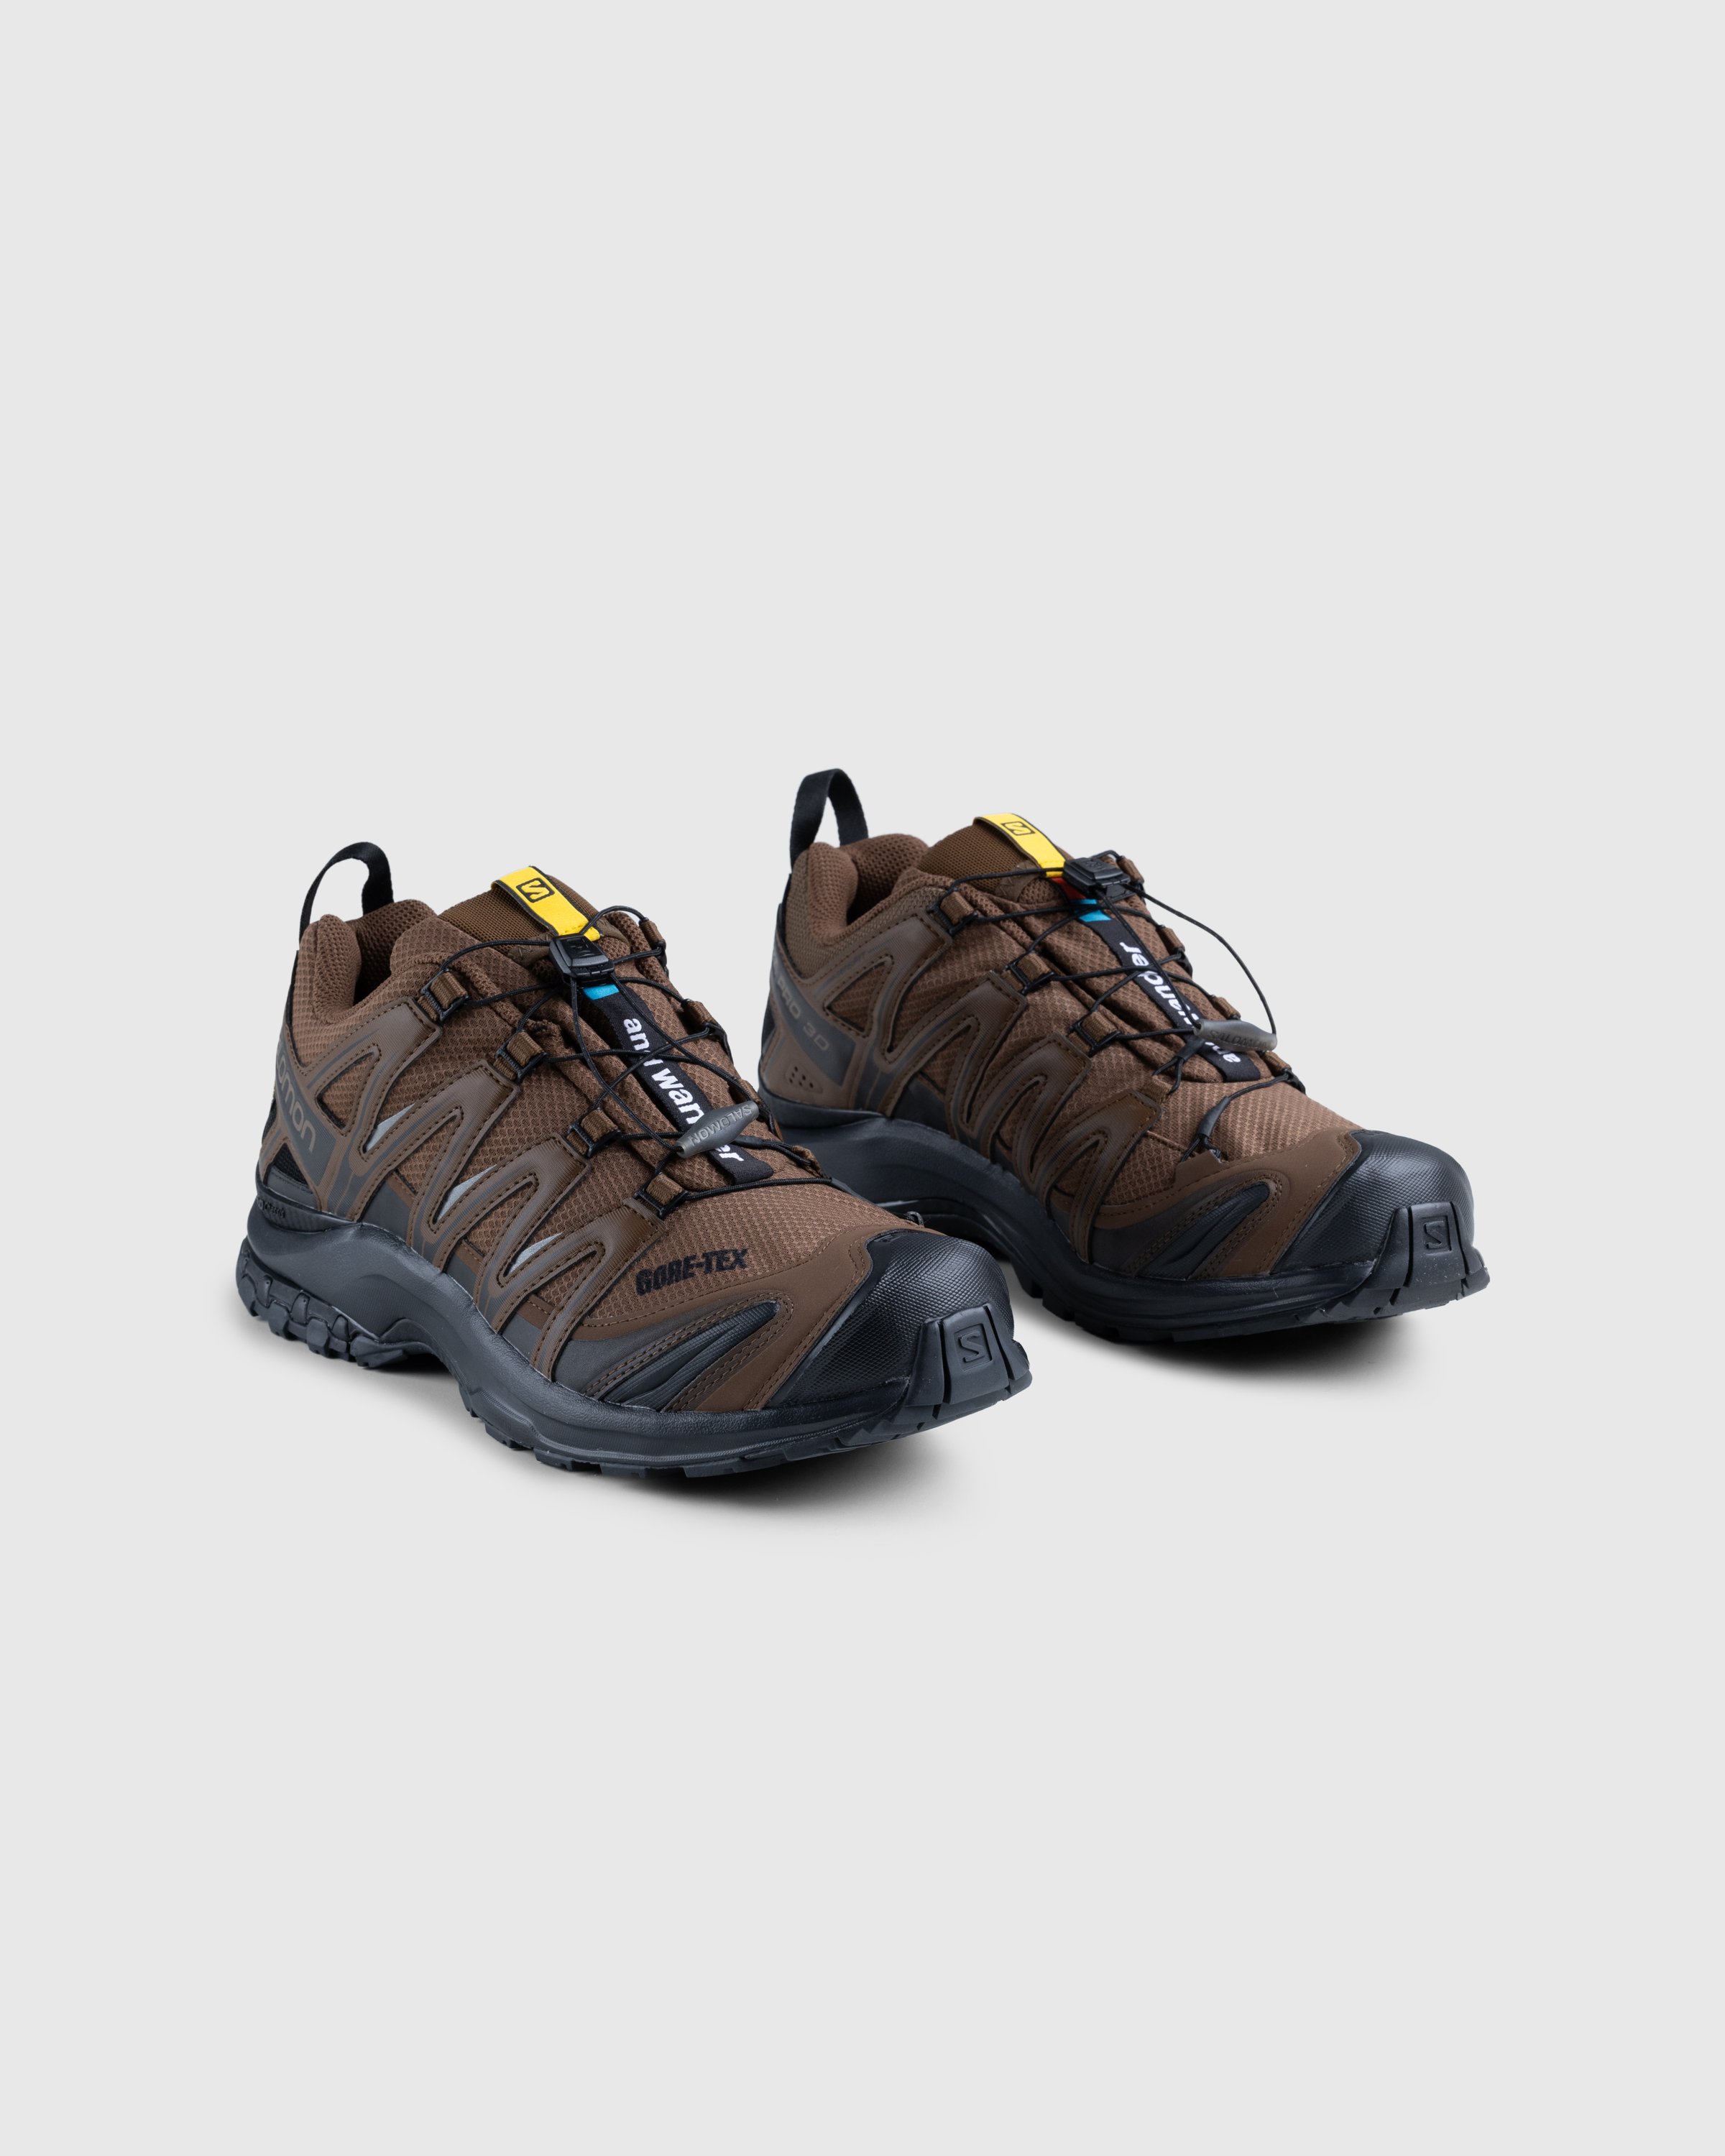 Salomon x And Wander - XA Pro 3D GORE-TEX Brown - Footwear - Brown - Image 3